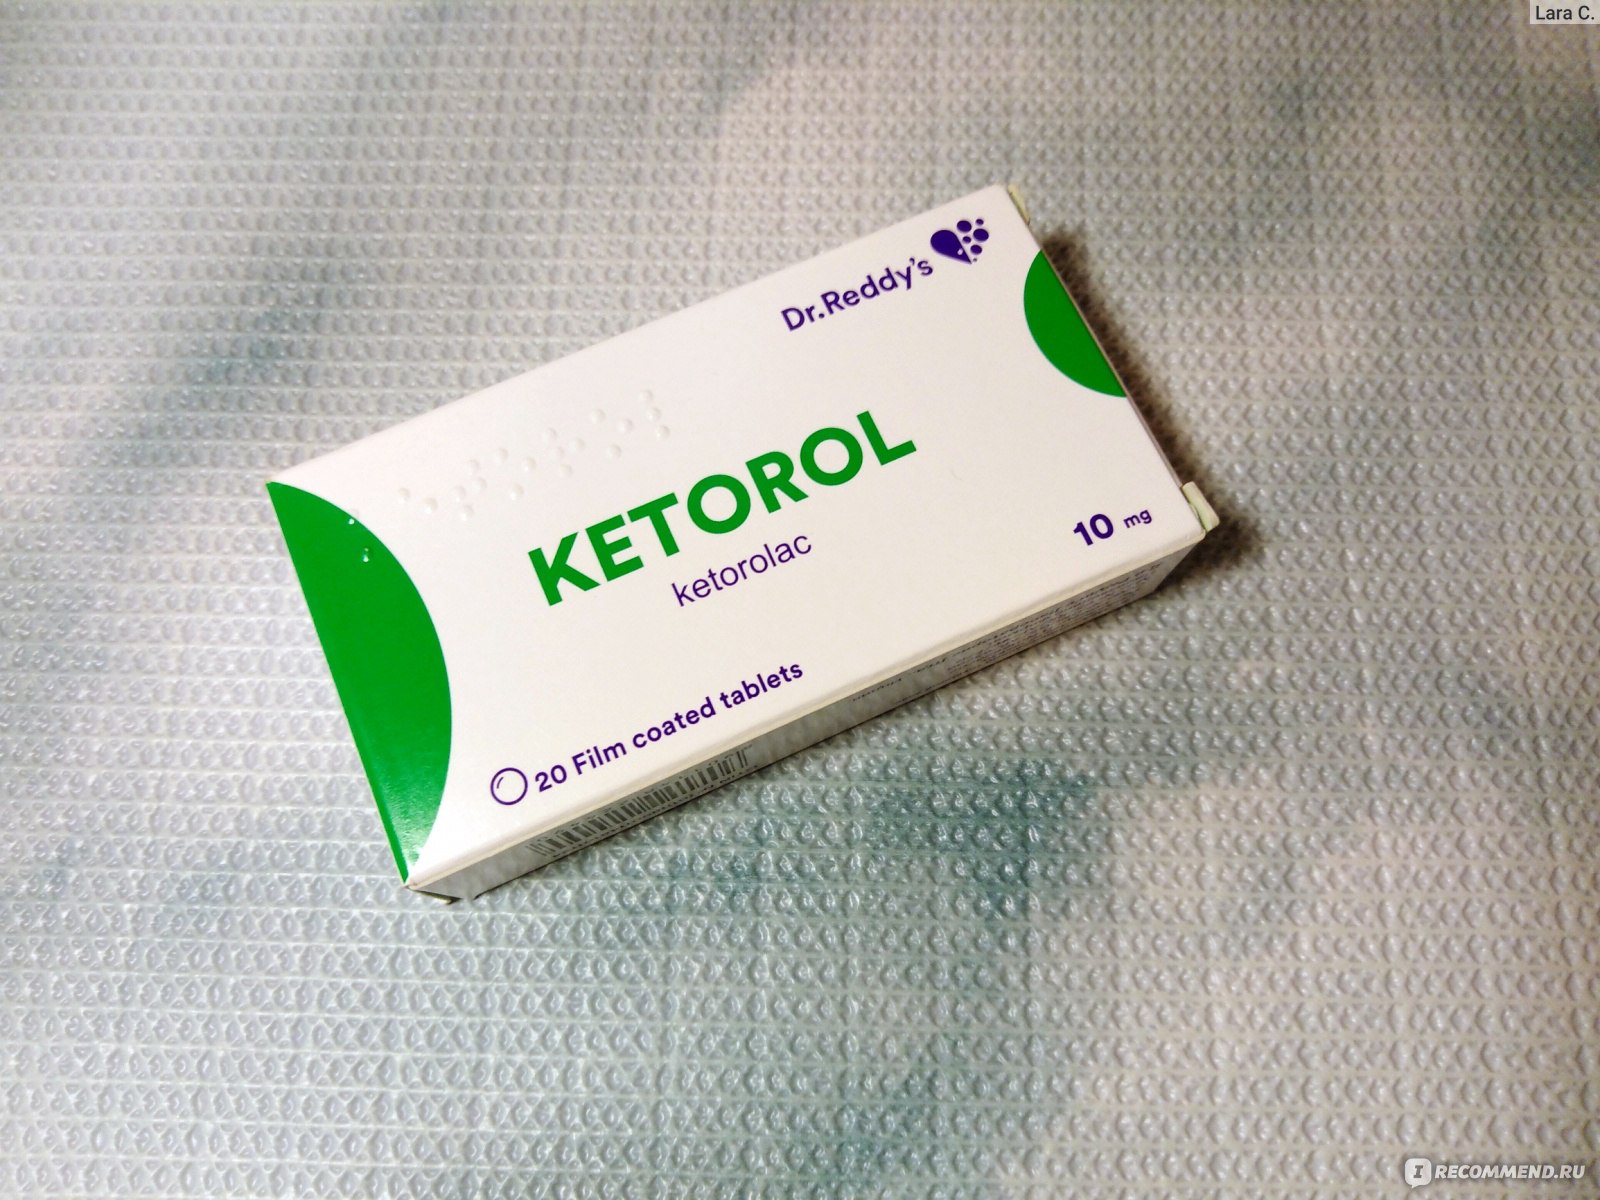 Обезболить сильнее кеторола